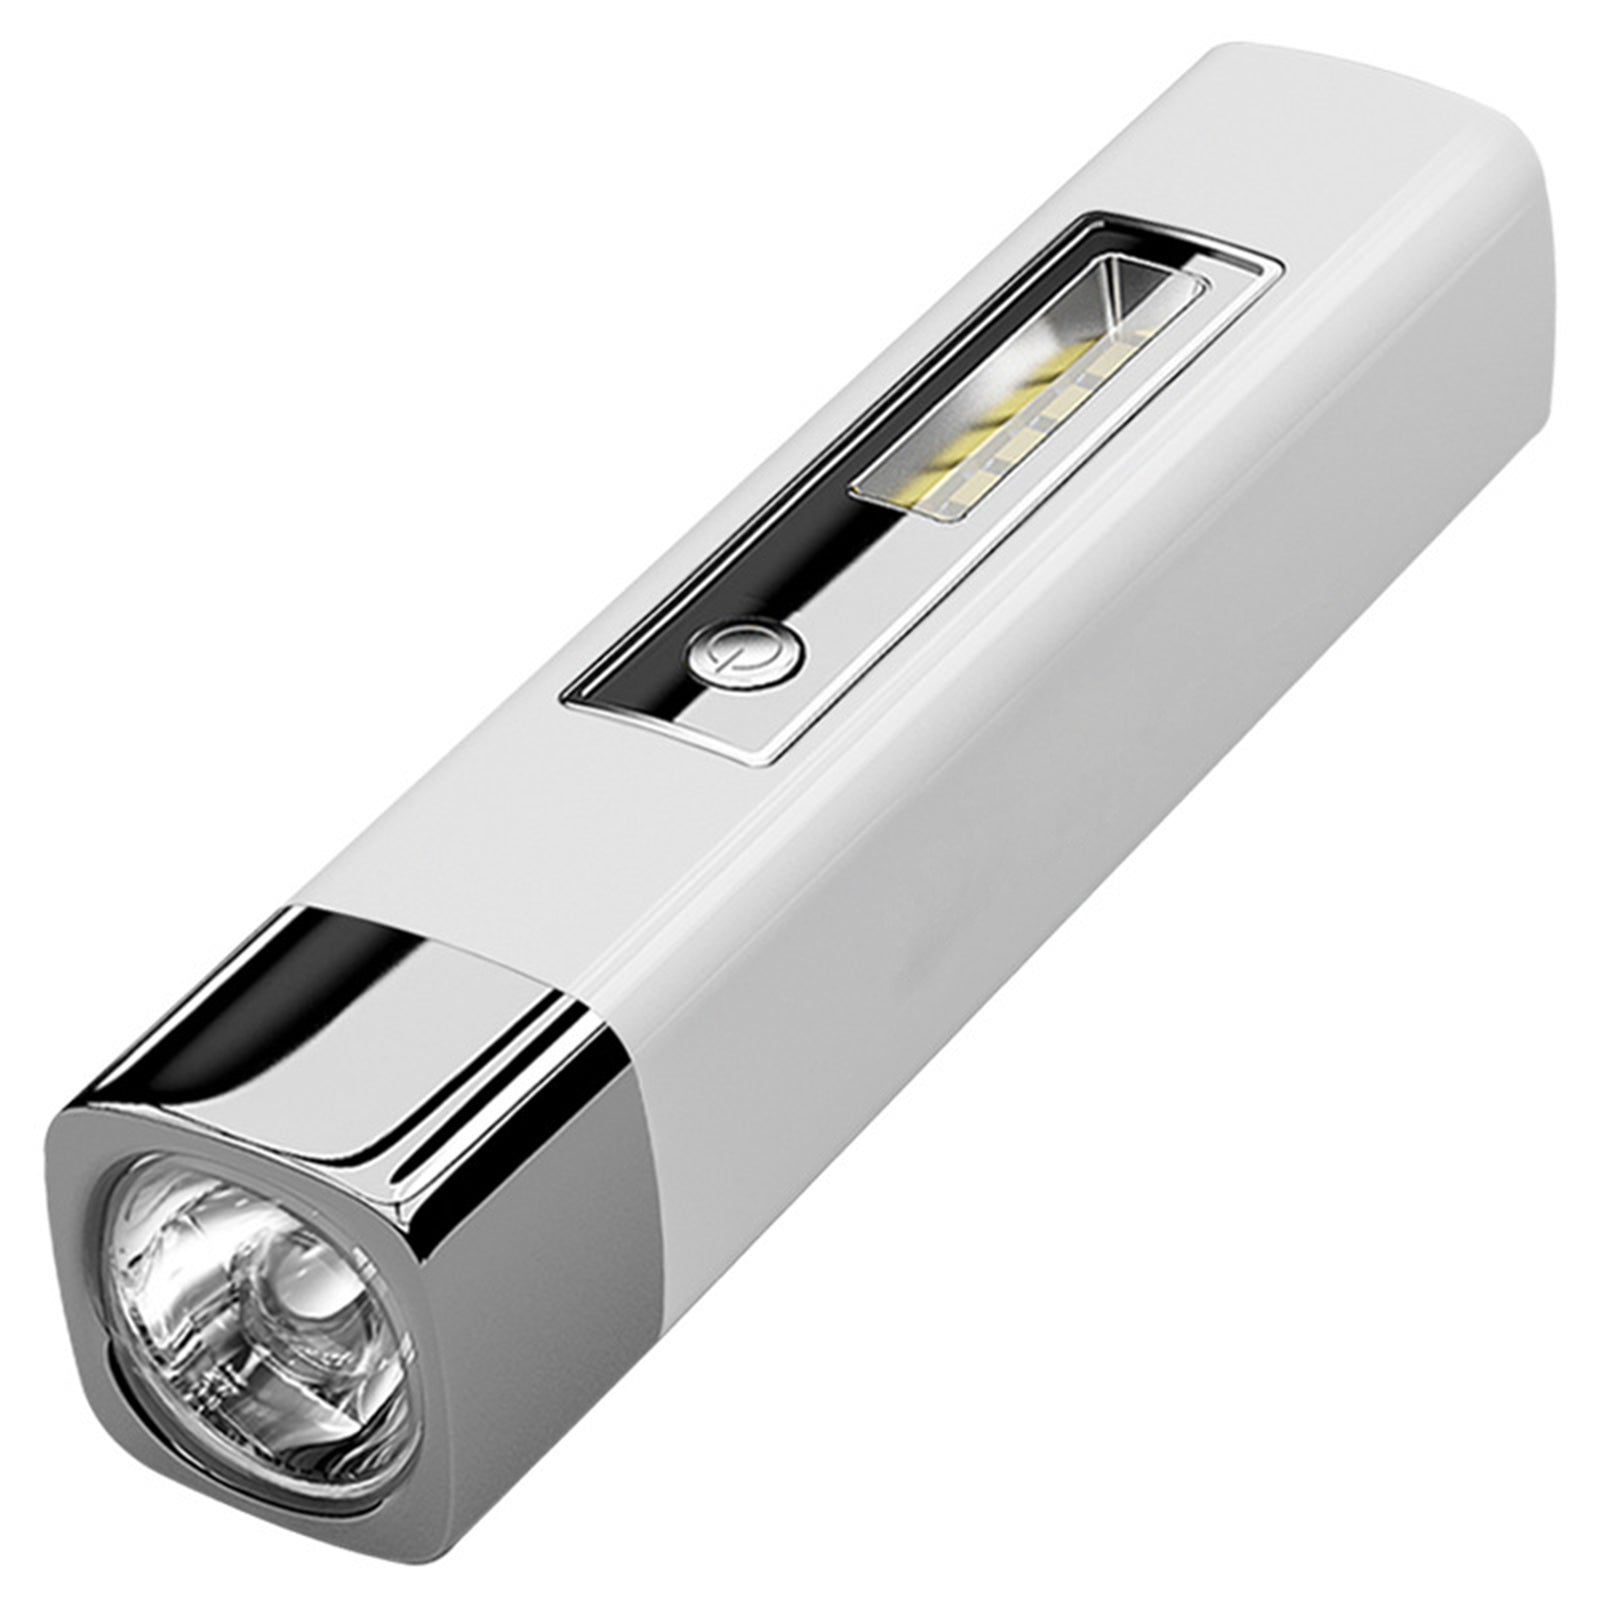 Mountgear Rechargeable Portable Small Flashlight - Outdoor Cycling Light